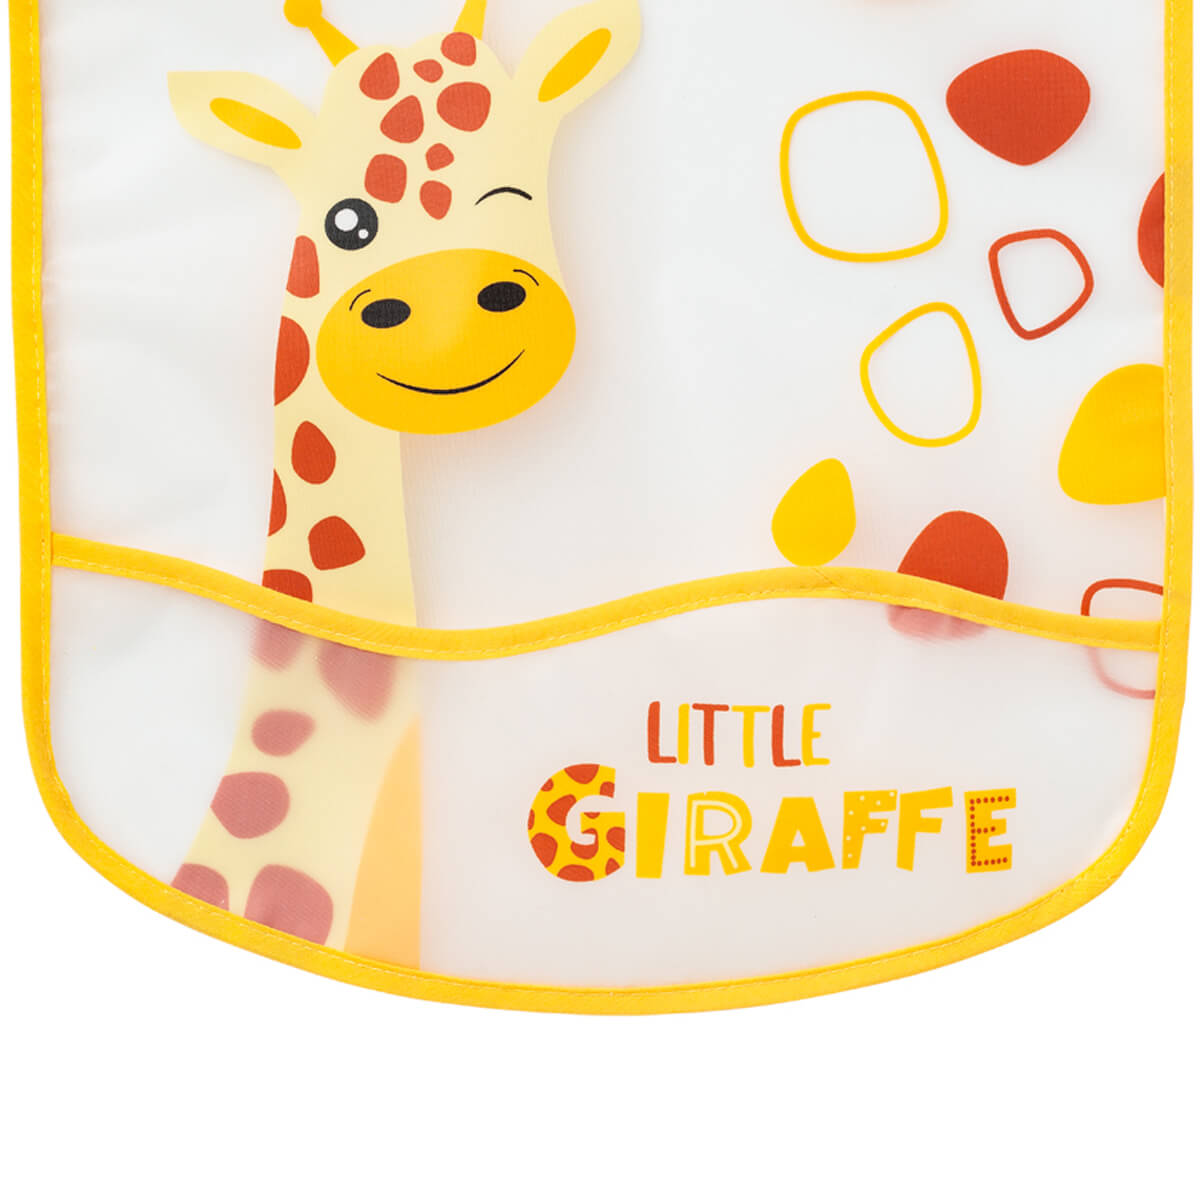 Bavoir 6 mois imperméable à poche 28x32 cm - Girafe Babycalin - BB Malin